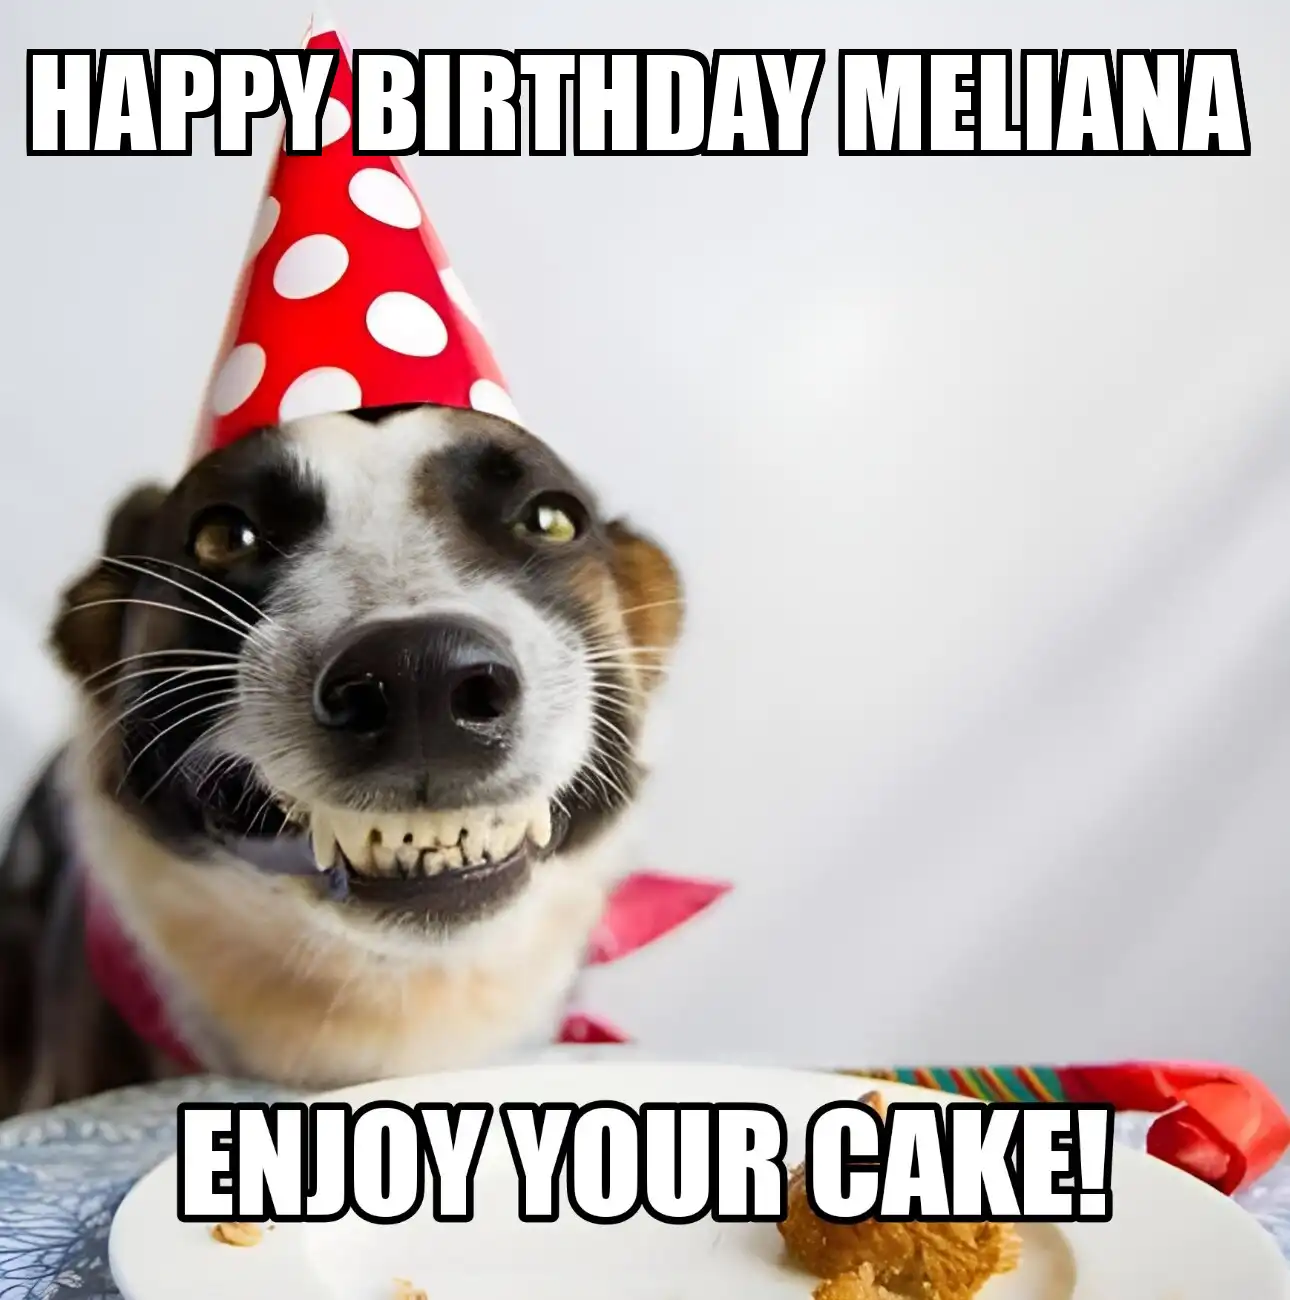 Happy Birthday Meliana Enjoy Your Cake Dog Meme